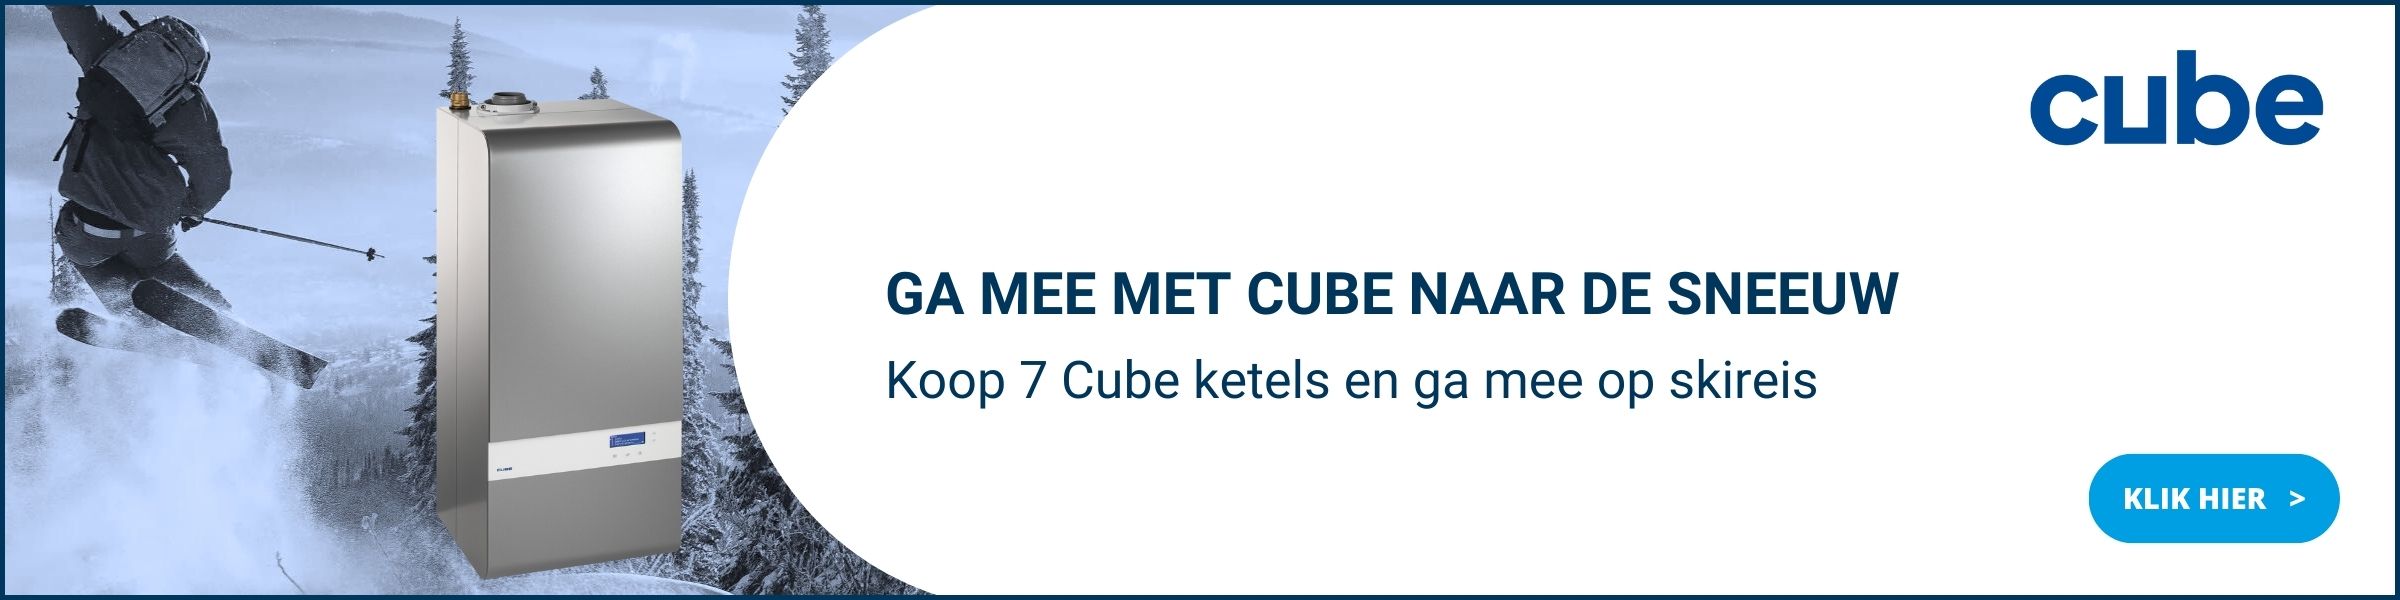 cube homepage banner BLUE_NL.jpg